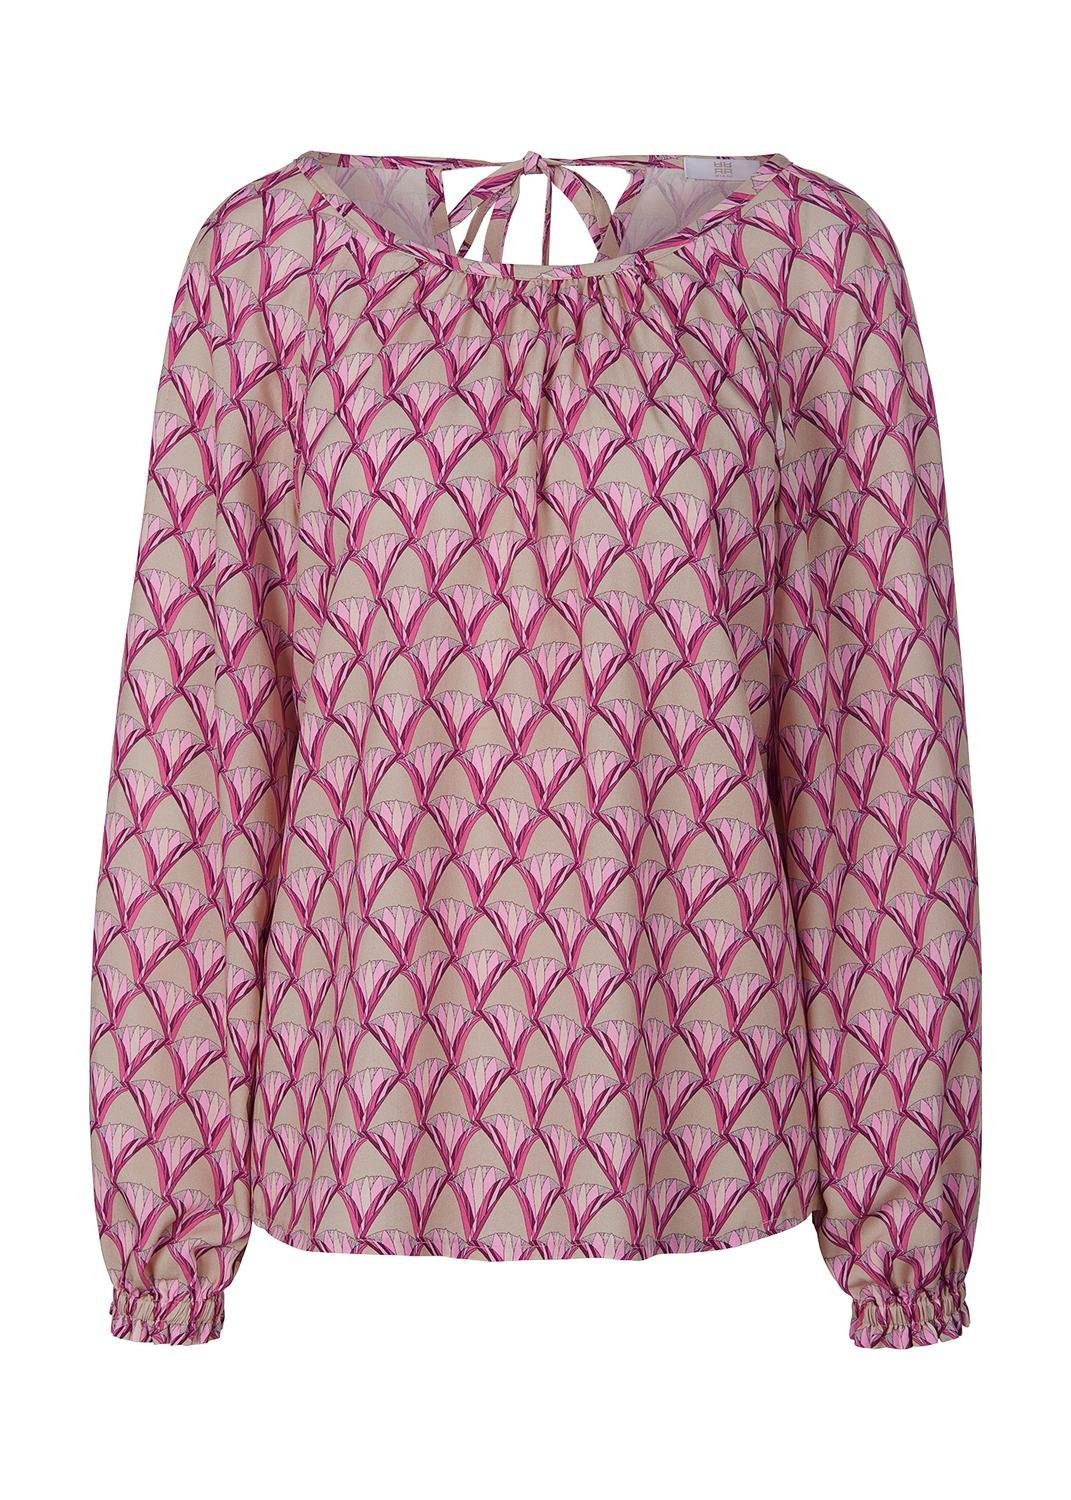 Riani Blusenshirt Bluse, cosmic pink patterned